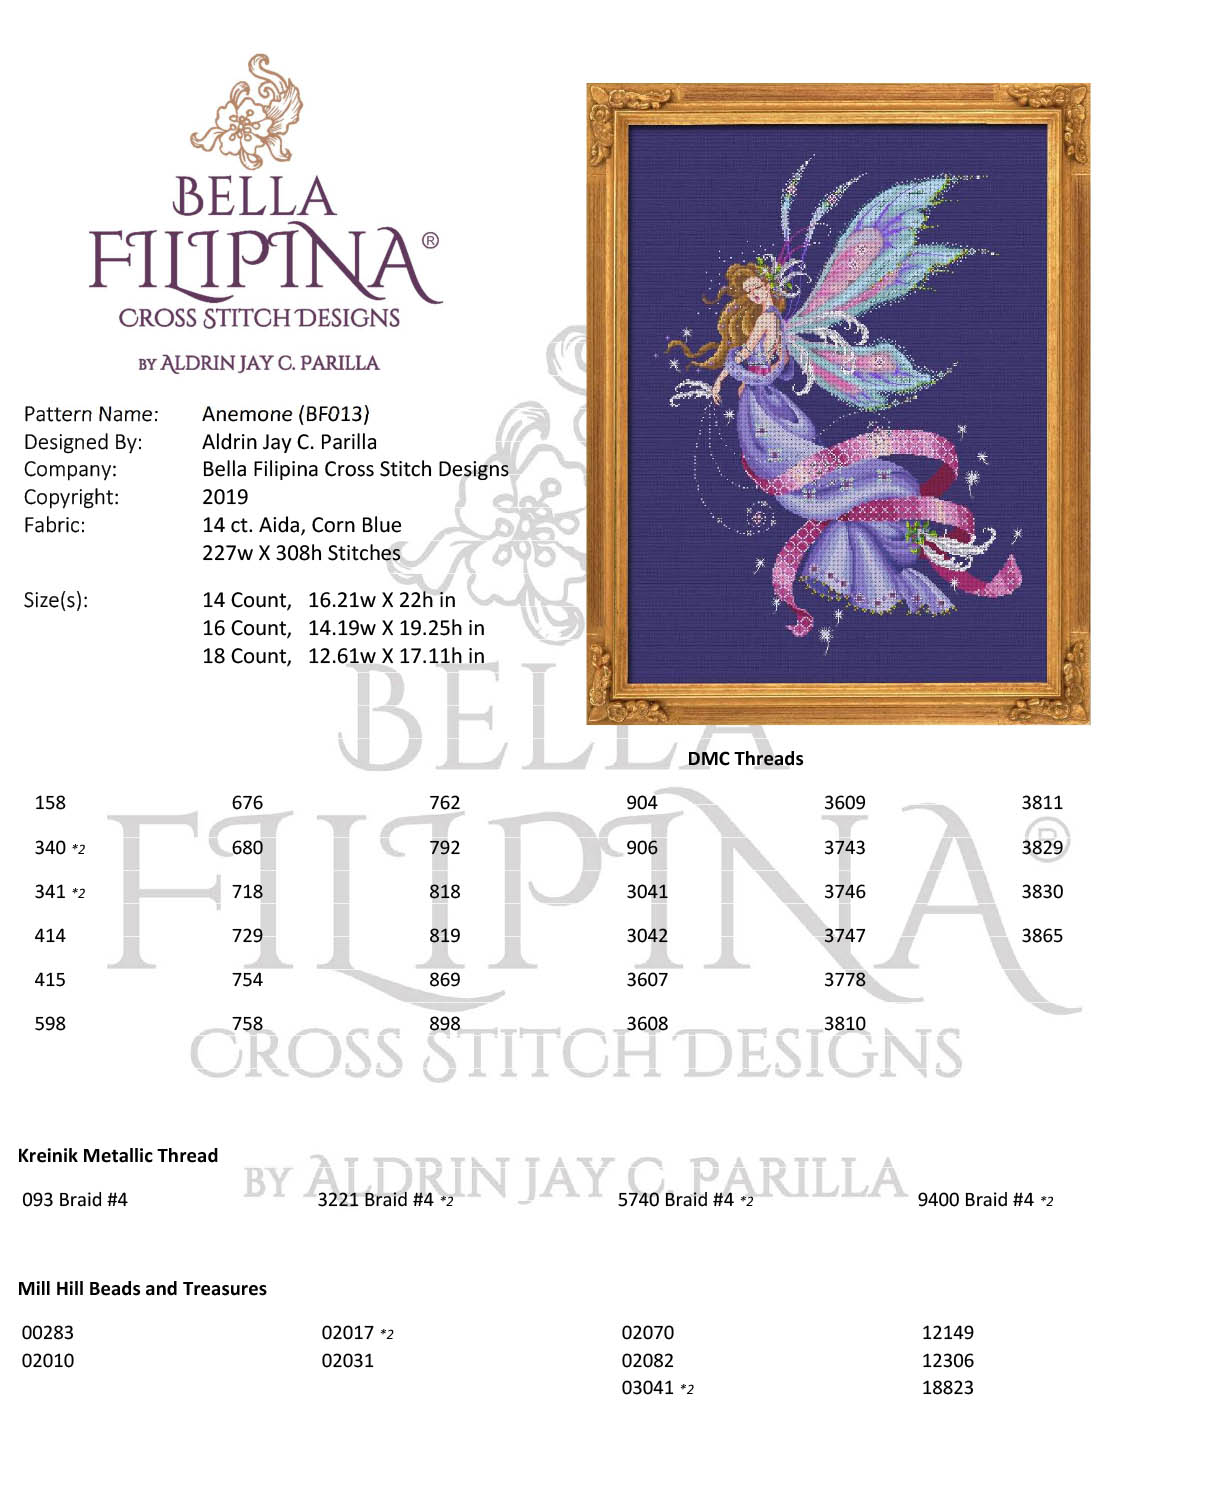 BF013 Bella Filipina-Anemone